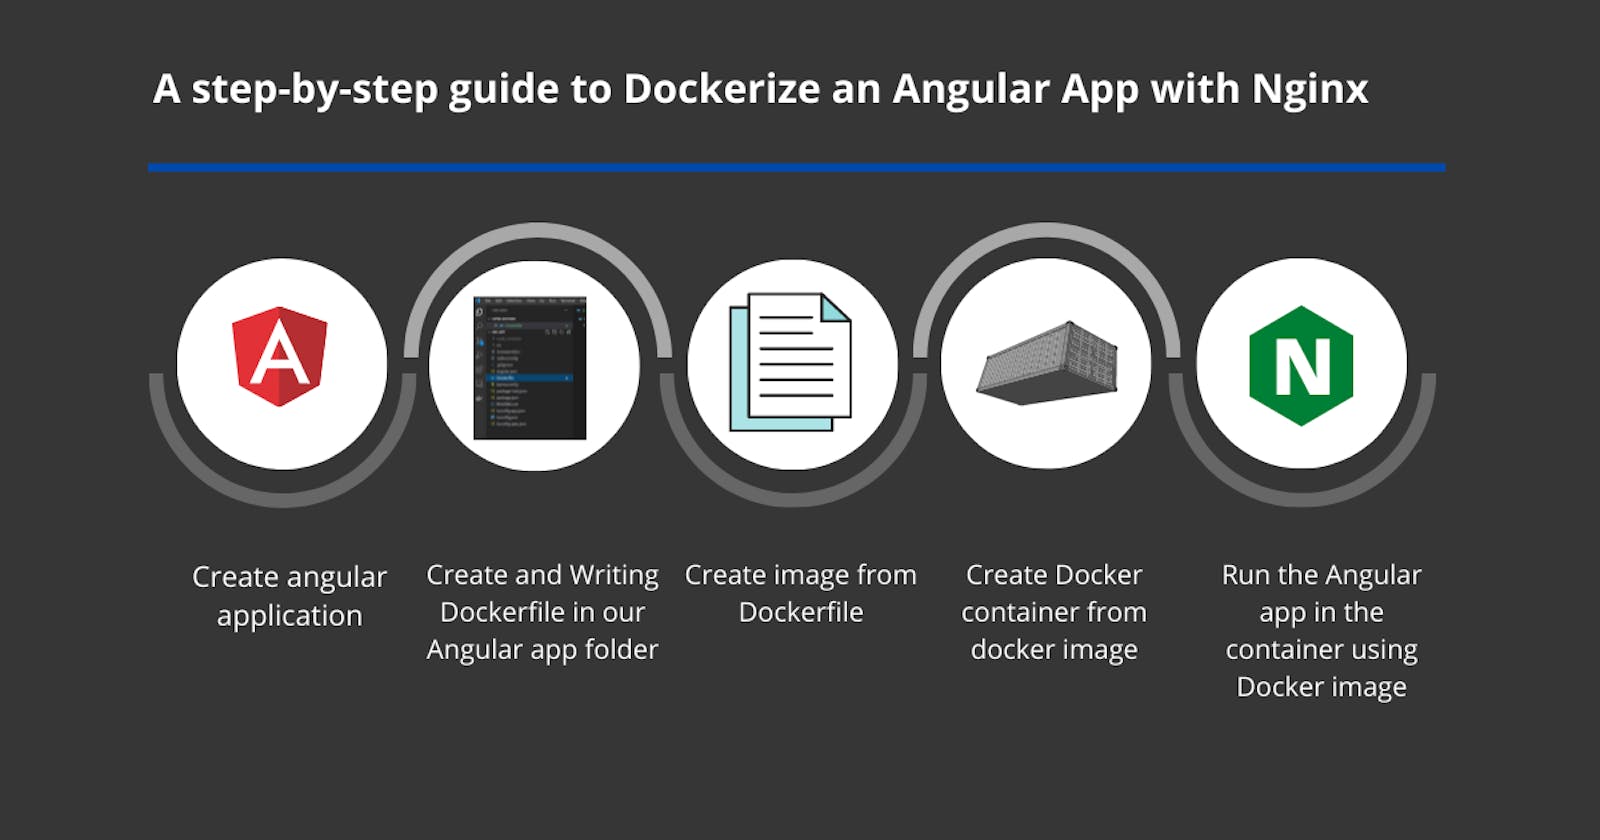 Dockerize an Angular App with Nginx